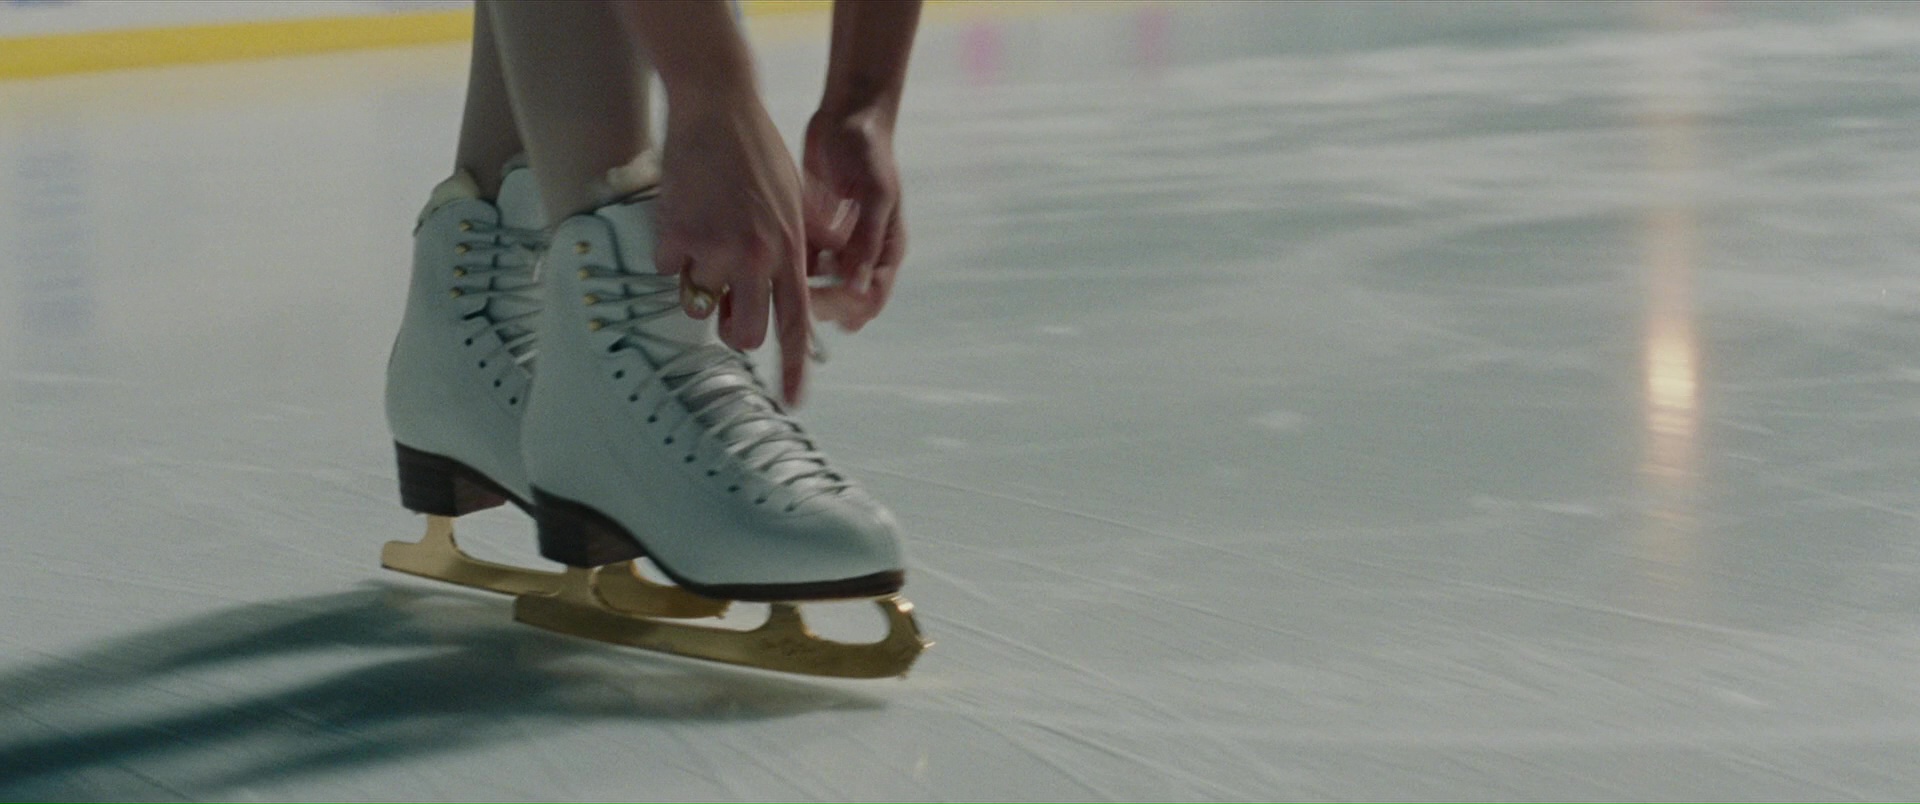 Jackson Freestyle Figure Skates Worn by Margot Robbie in I, Tonya (2017) Movie1920 x 804